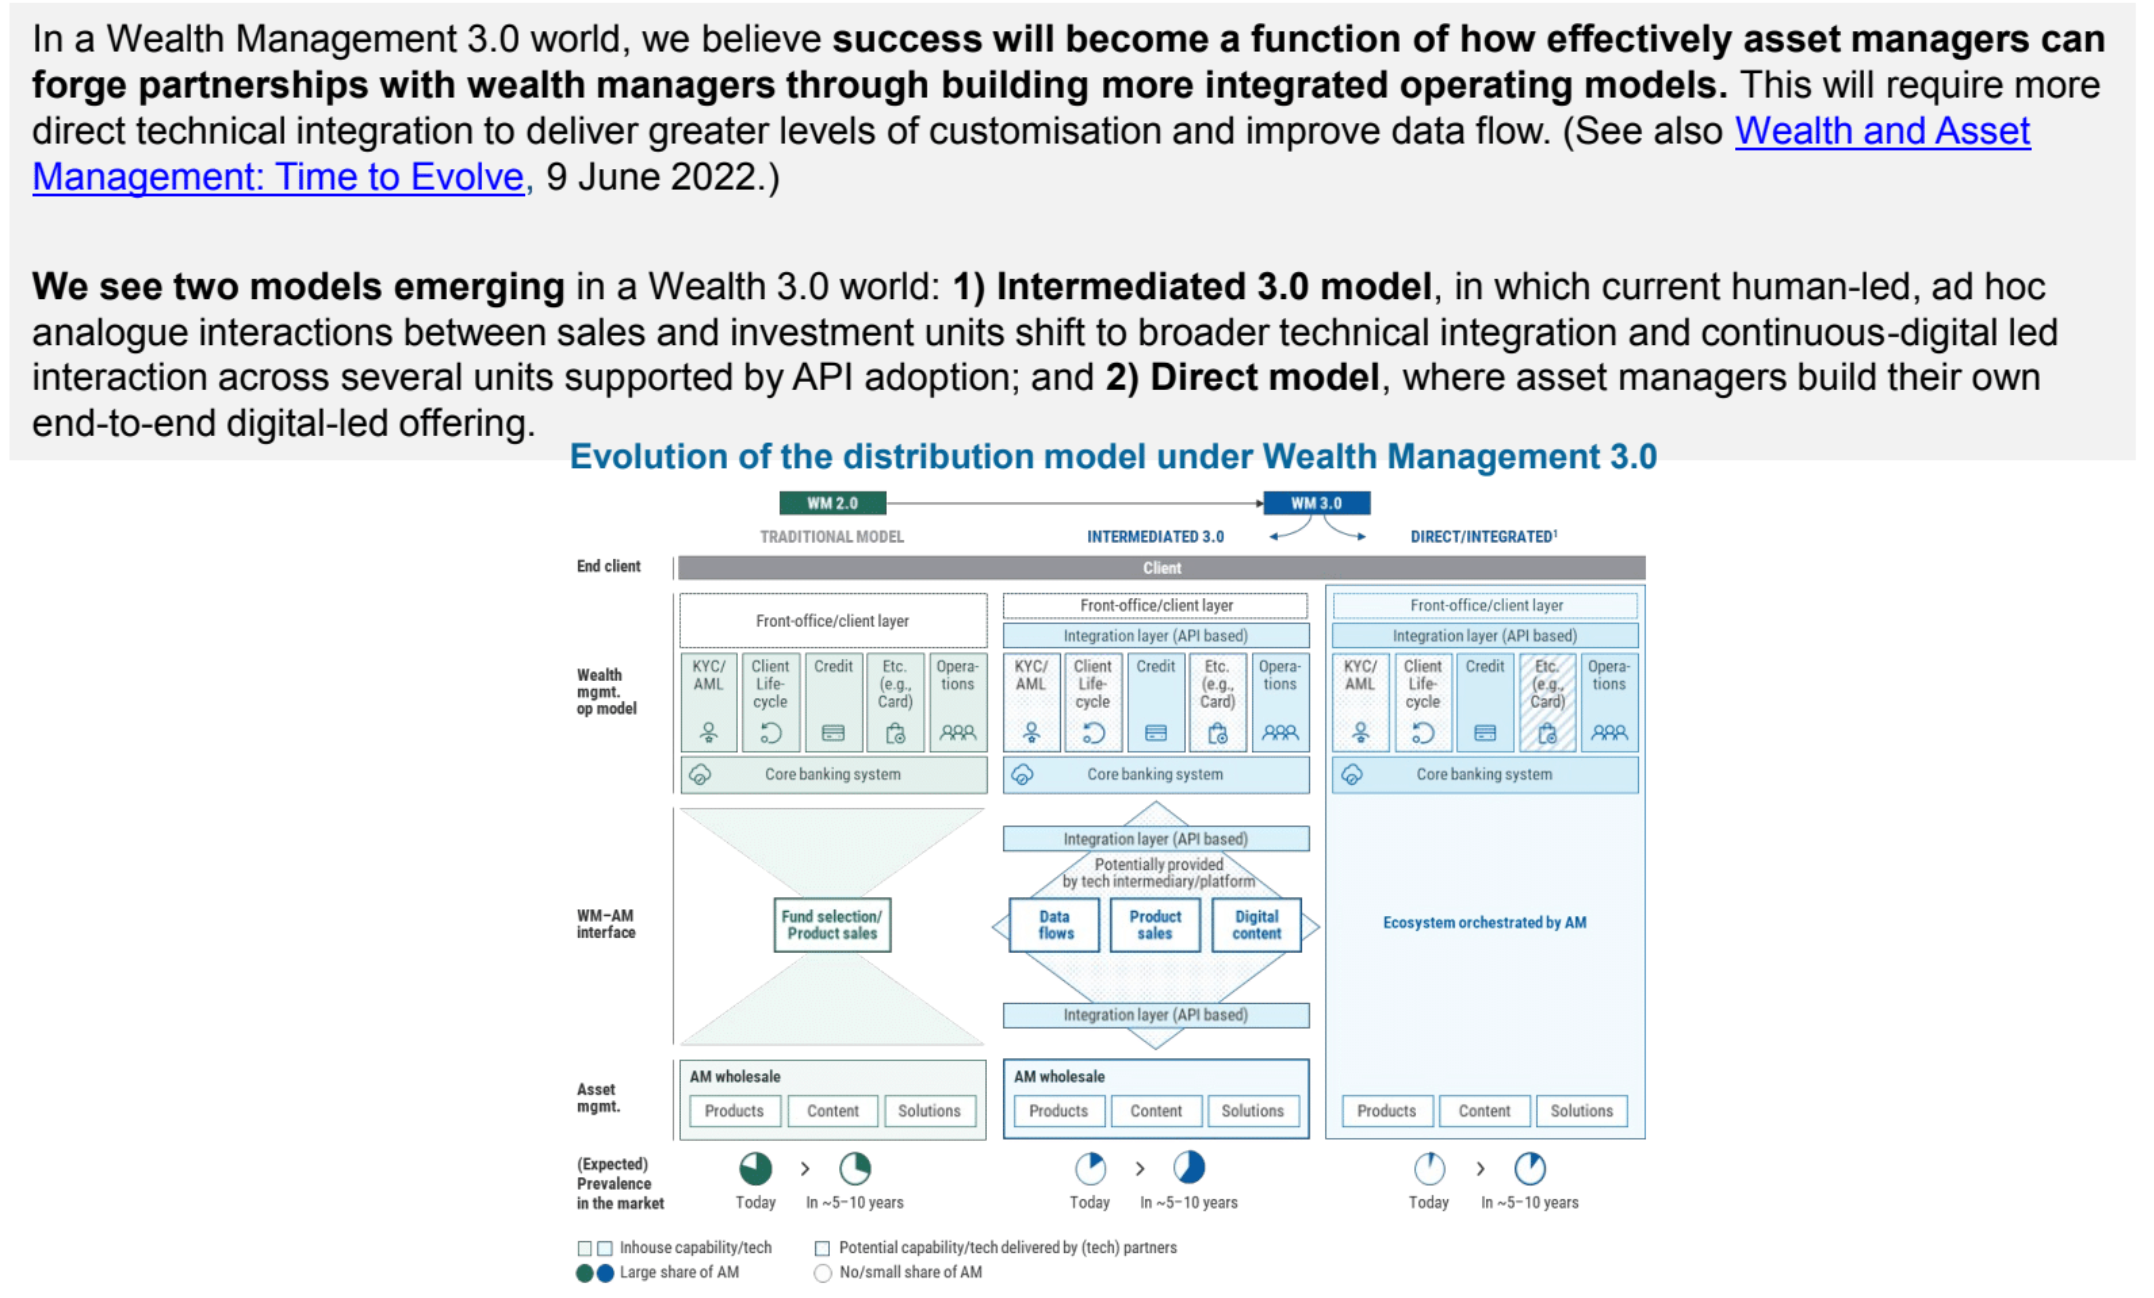 Morgan Stanley - Wealth Management 3.0